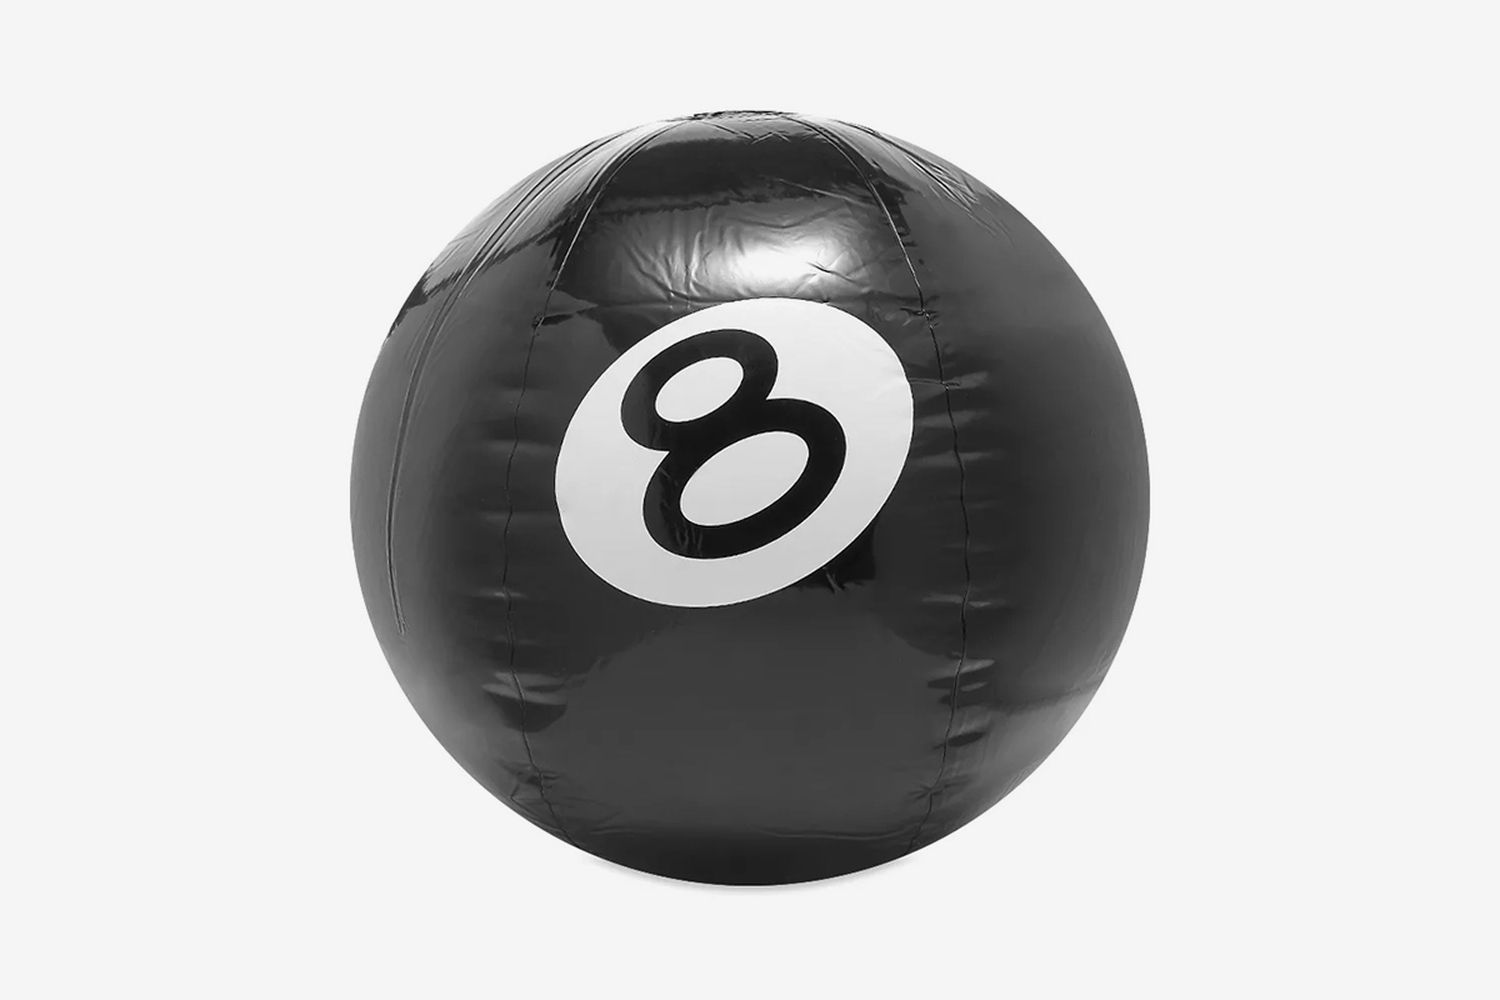 8-Ball Beach Ball